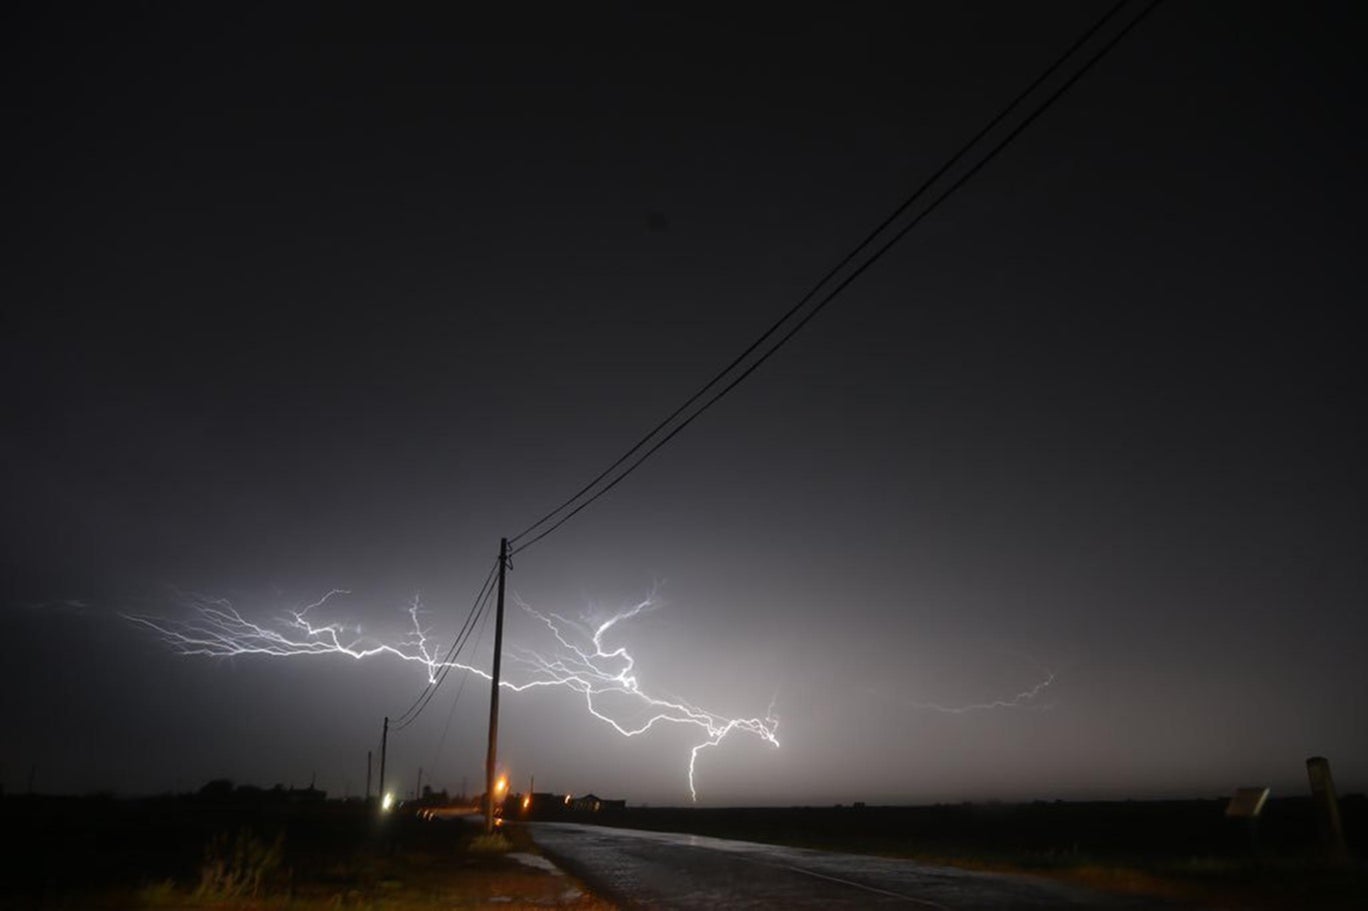 eastbourne-lightning-1000-11.jpg?width=1368&amp;height=912&amp;fit=bounds&amp;format=pjpg&amp;auto=webp&amp;quality=70